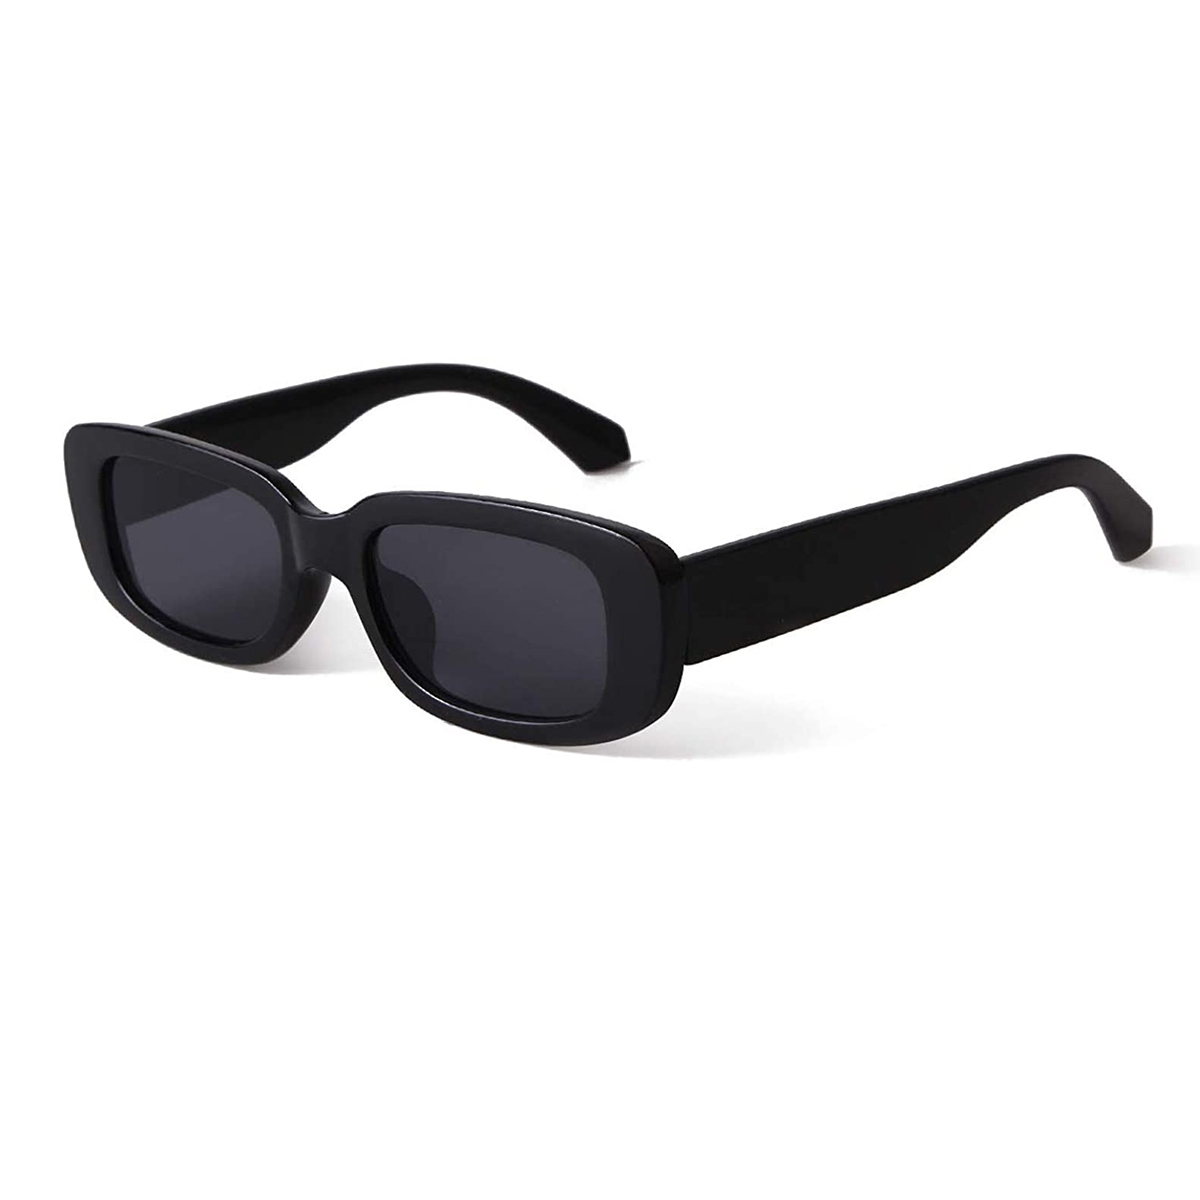 rectangle sunglasses mens amazon